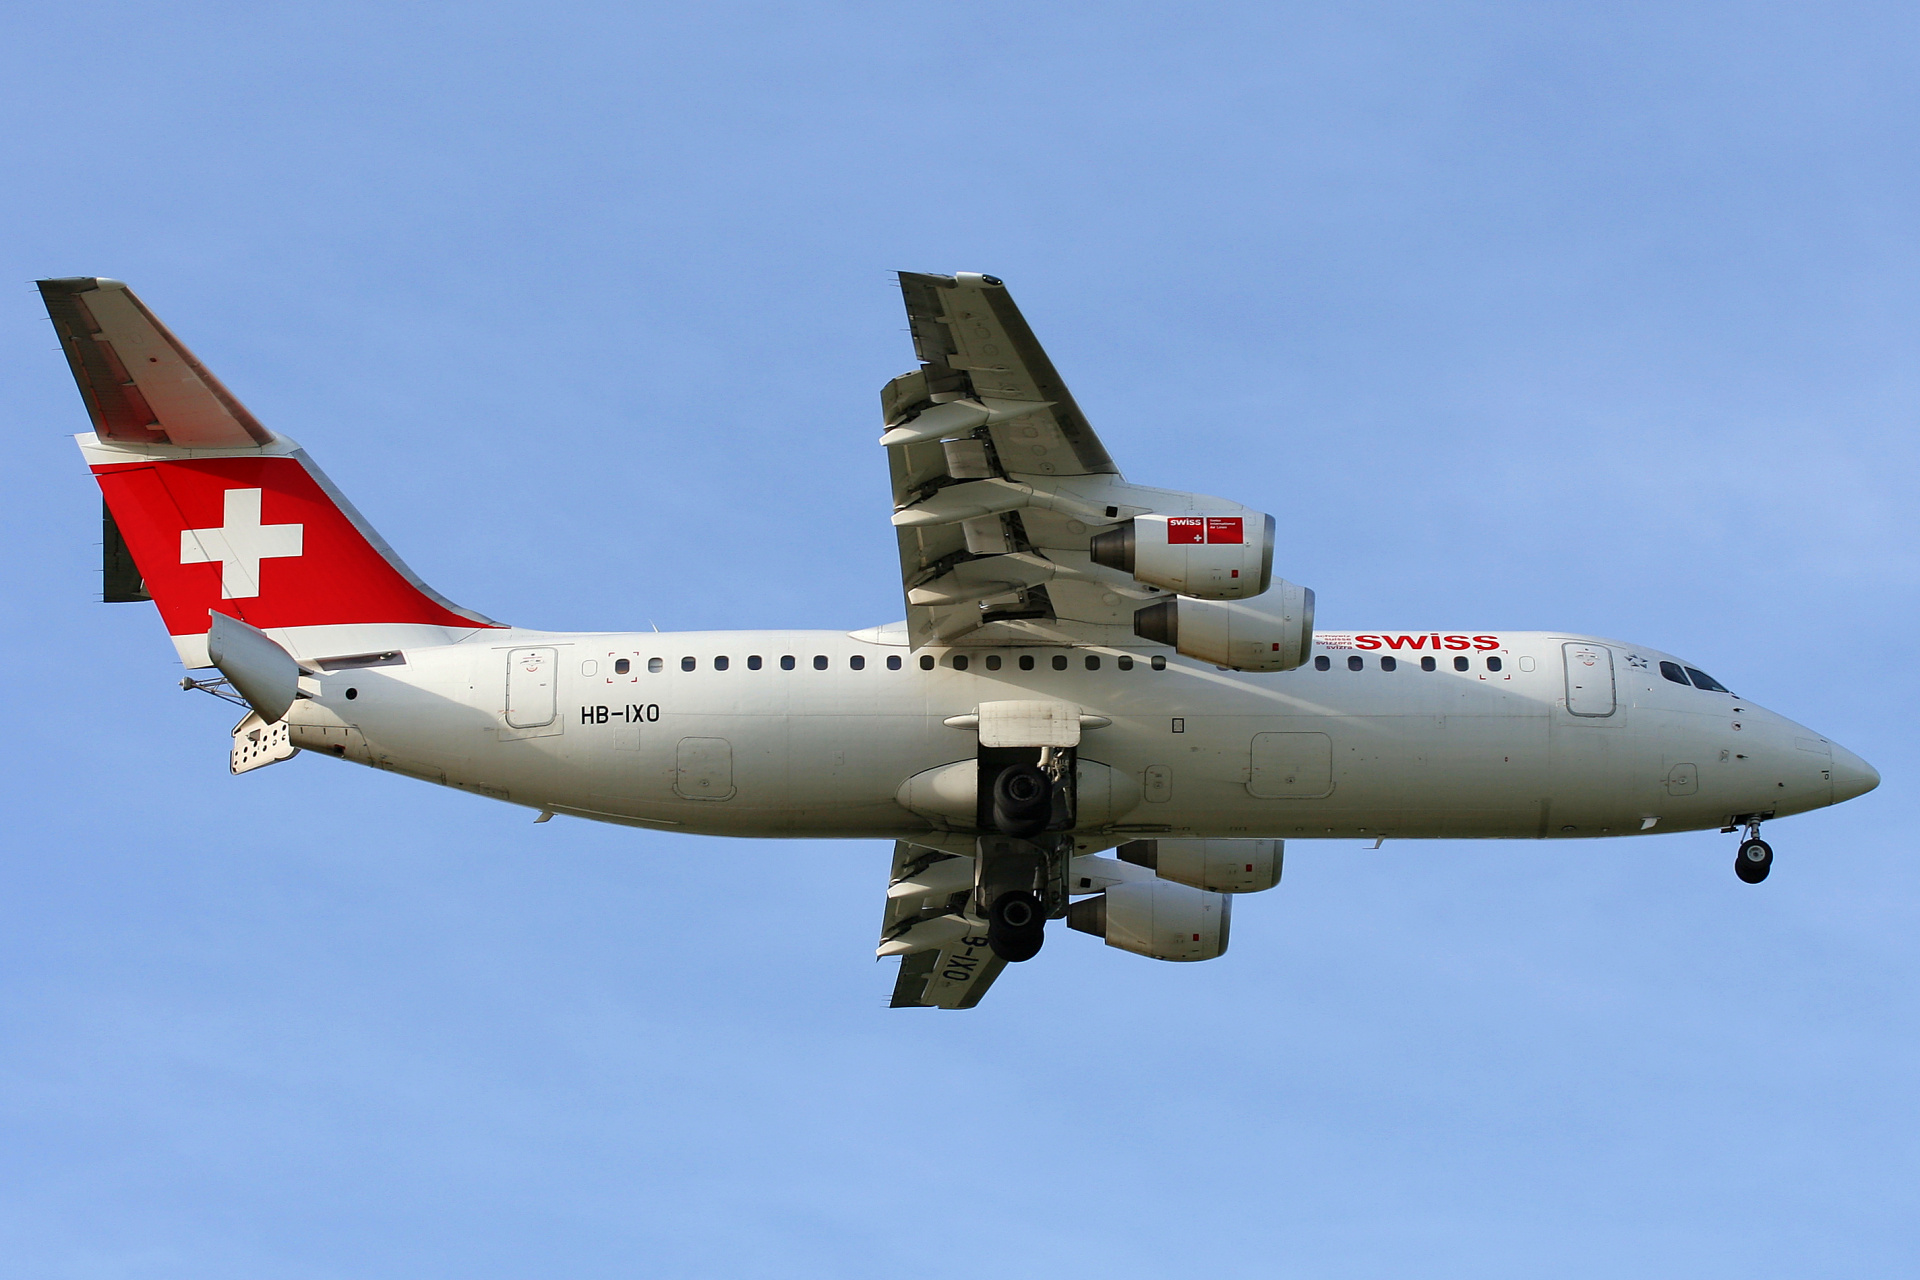 HB-IXO (Aircraft » EPWA Spotting » BAe 146 and revisions » Avro RJ100 » Swiss Global Air Lines)